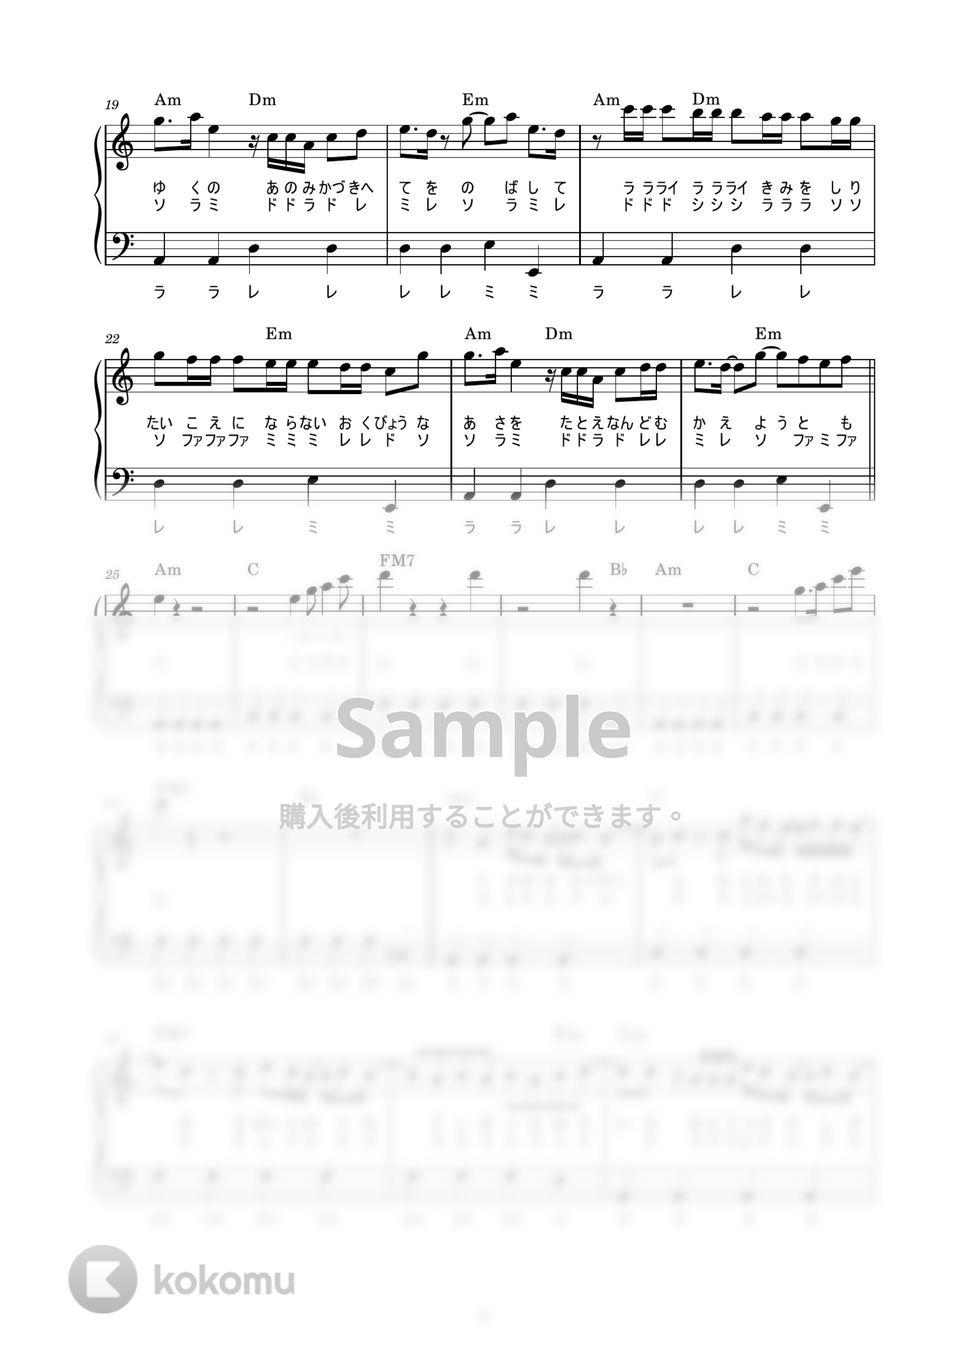 millennium parade × Belle - U (かんたん / 歌詞付き / ドレミ付き / 初心者) by piano.tokyo